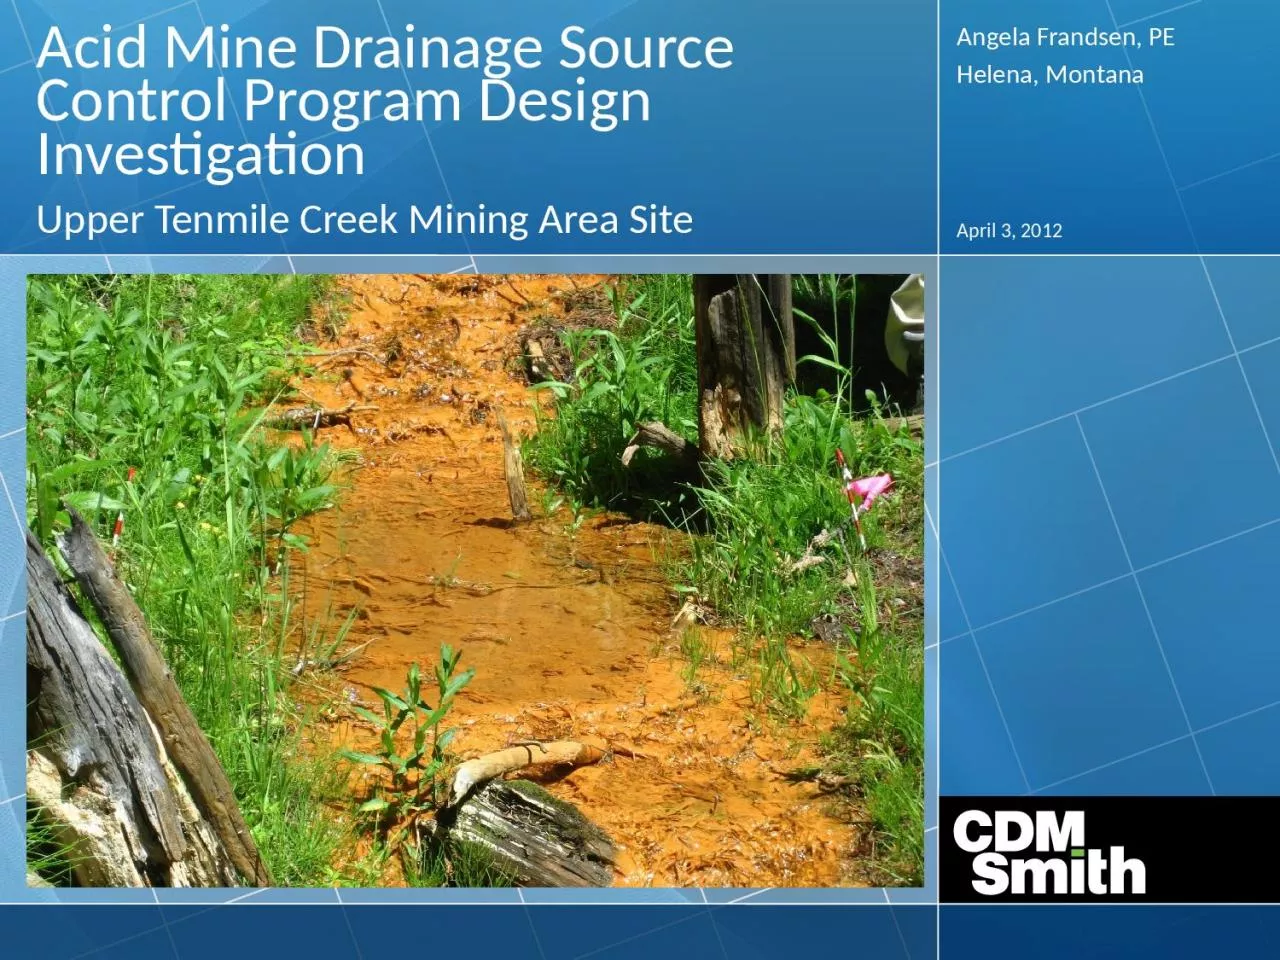 April 3, 2012 Acid Mine Drainage Source Control Program Design Investigation